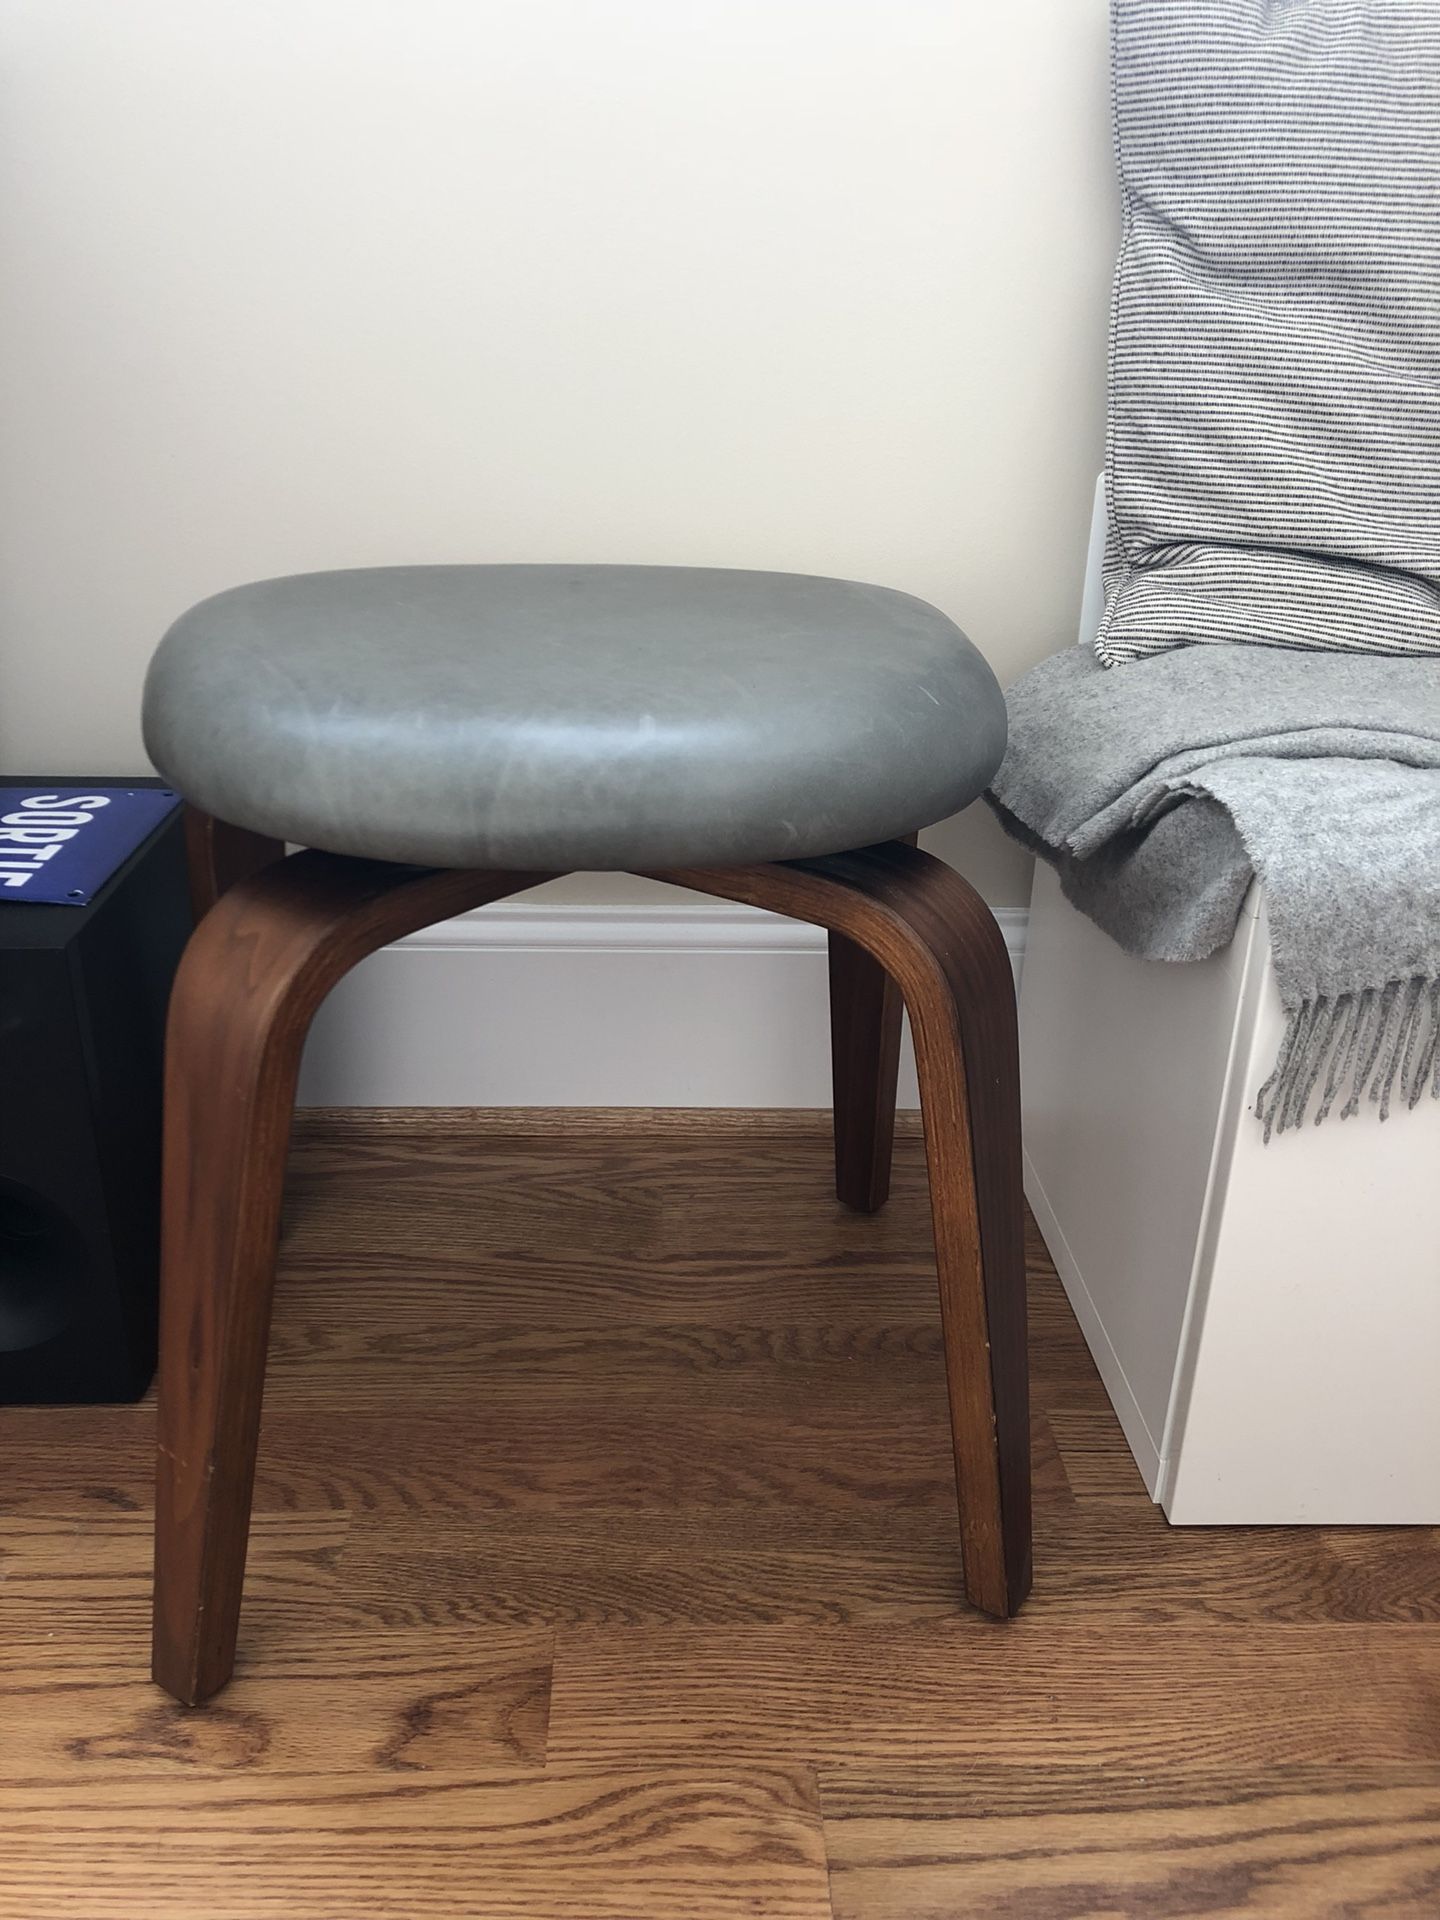 West elm leather and wood swivel stool - mid century modern